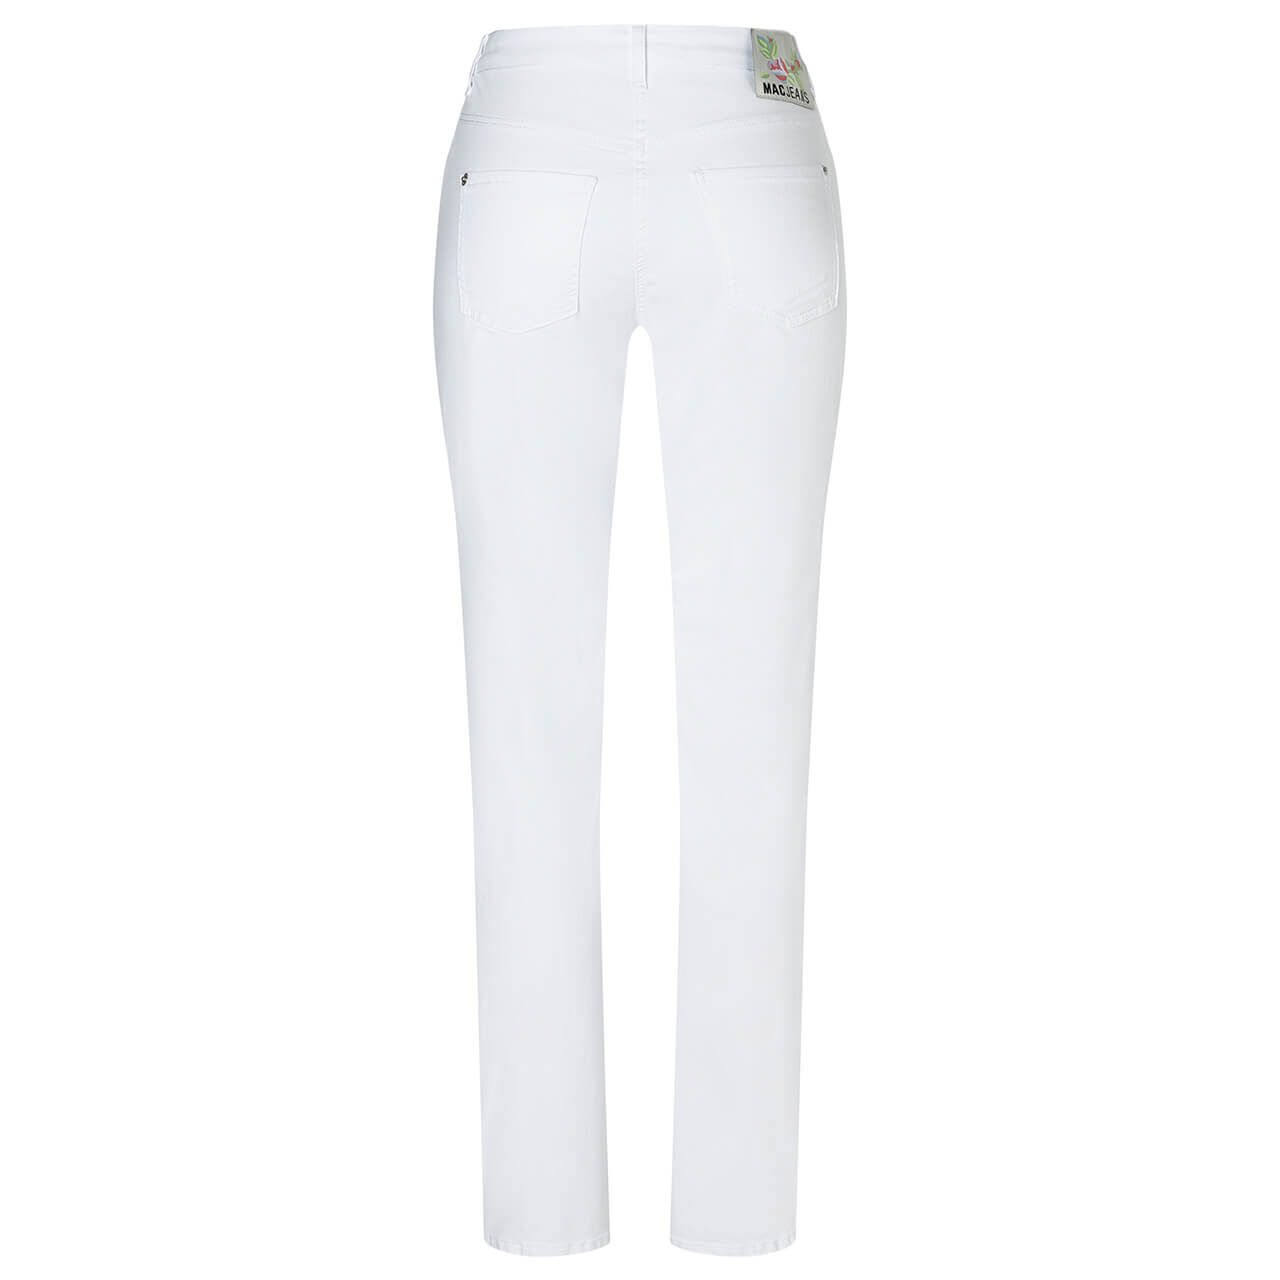 MAC Dream Jeans white wonderlight